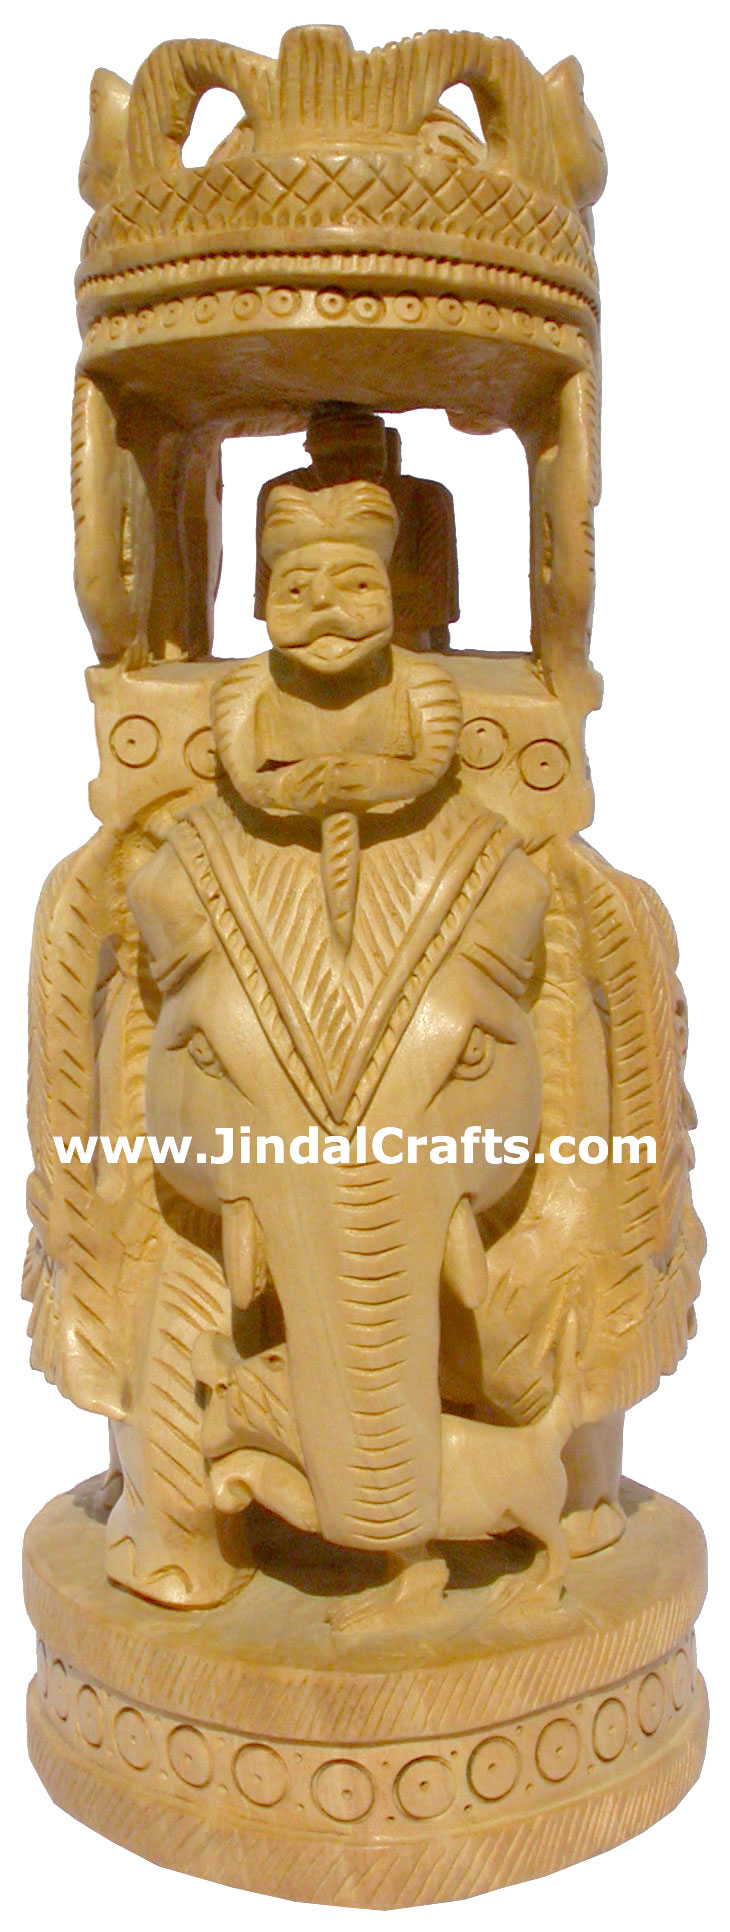 Handcarved Wood Sculpture King on Safari India Art Work Wild Jungle Statue Craft